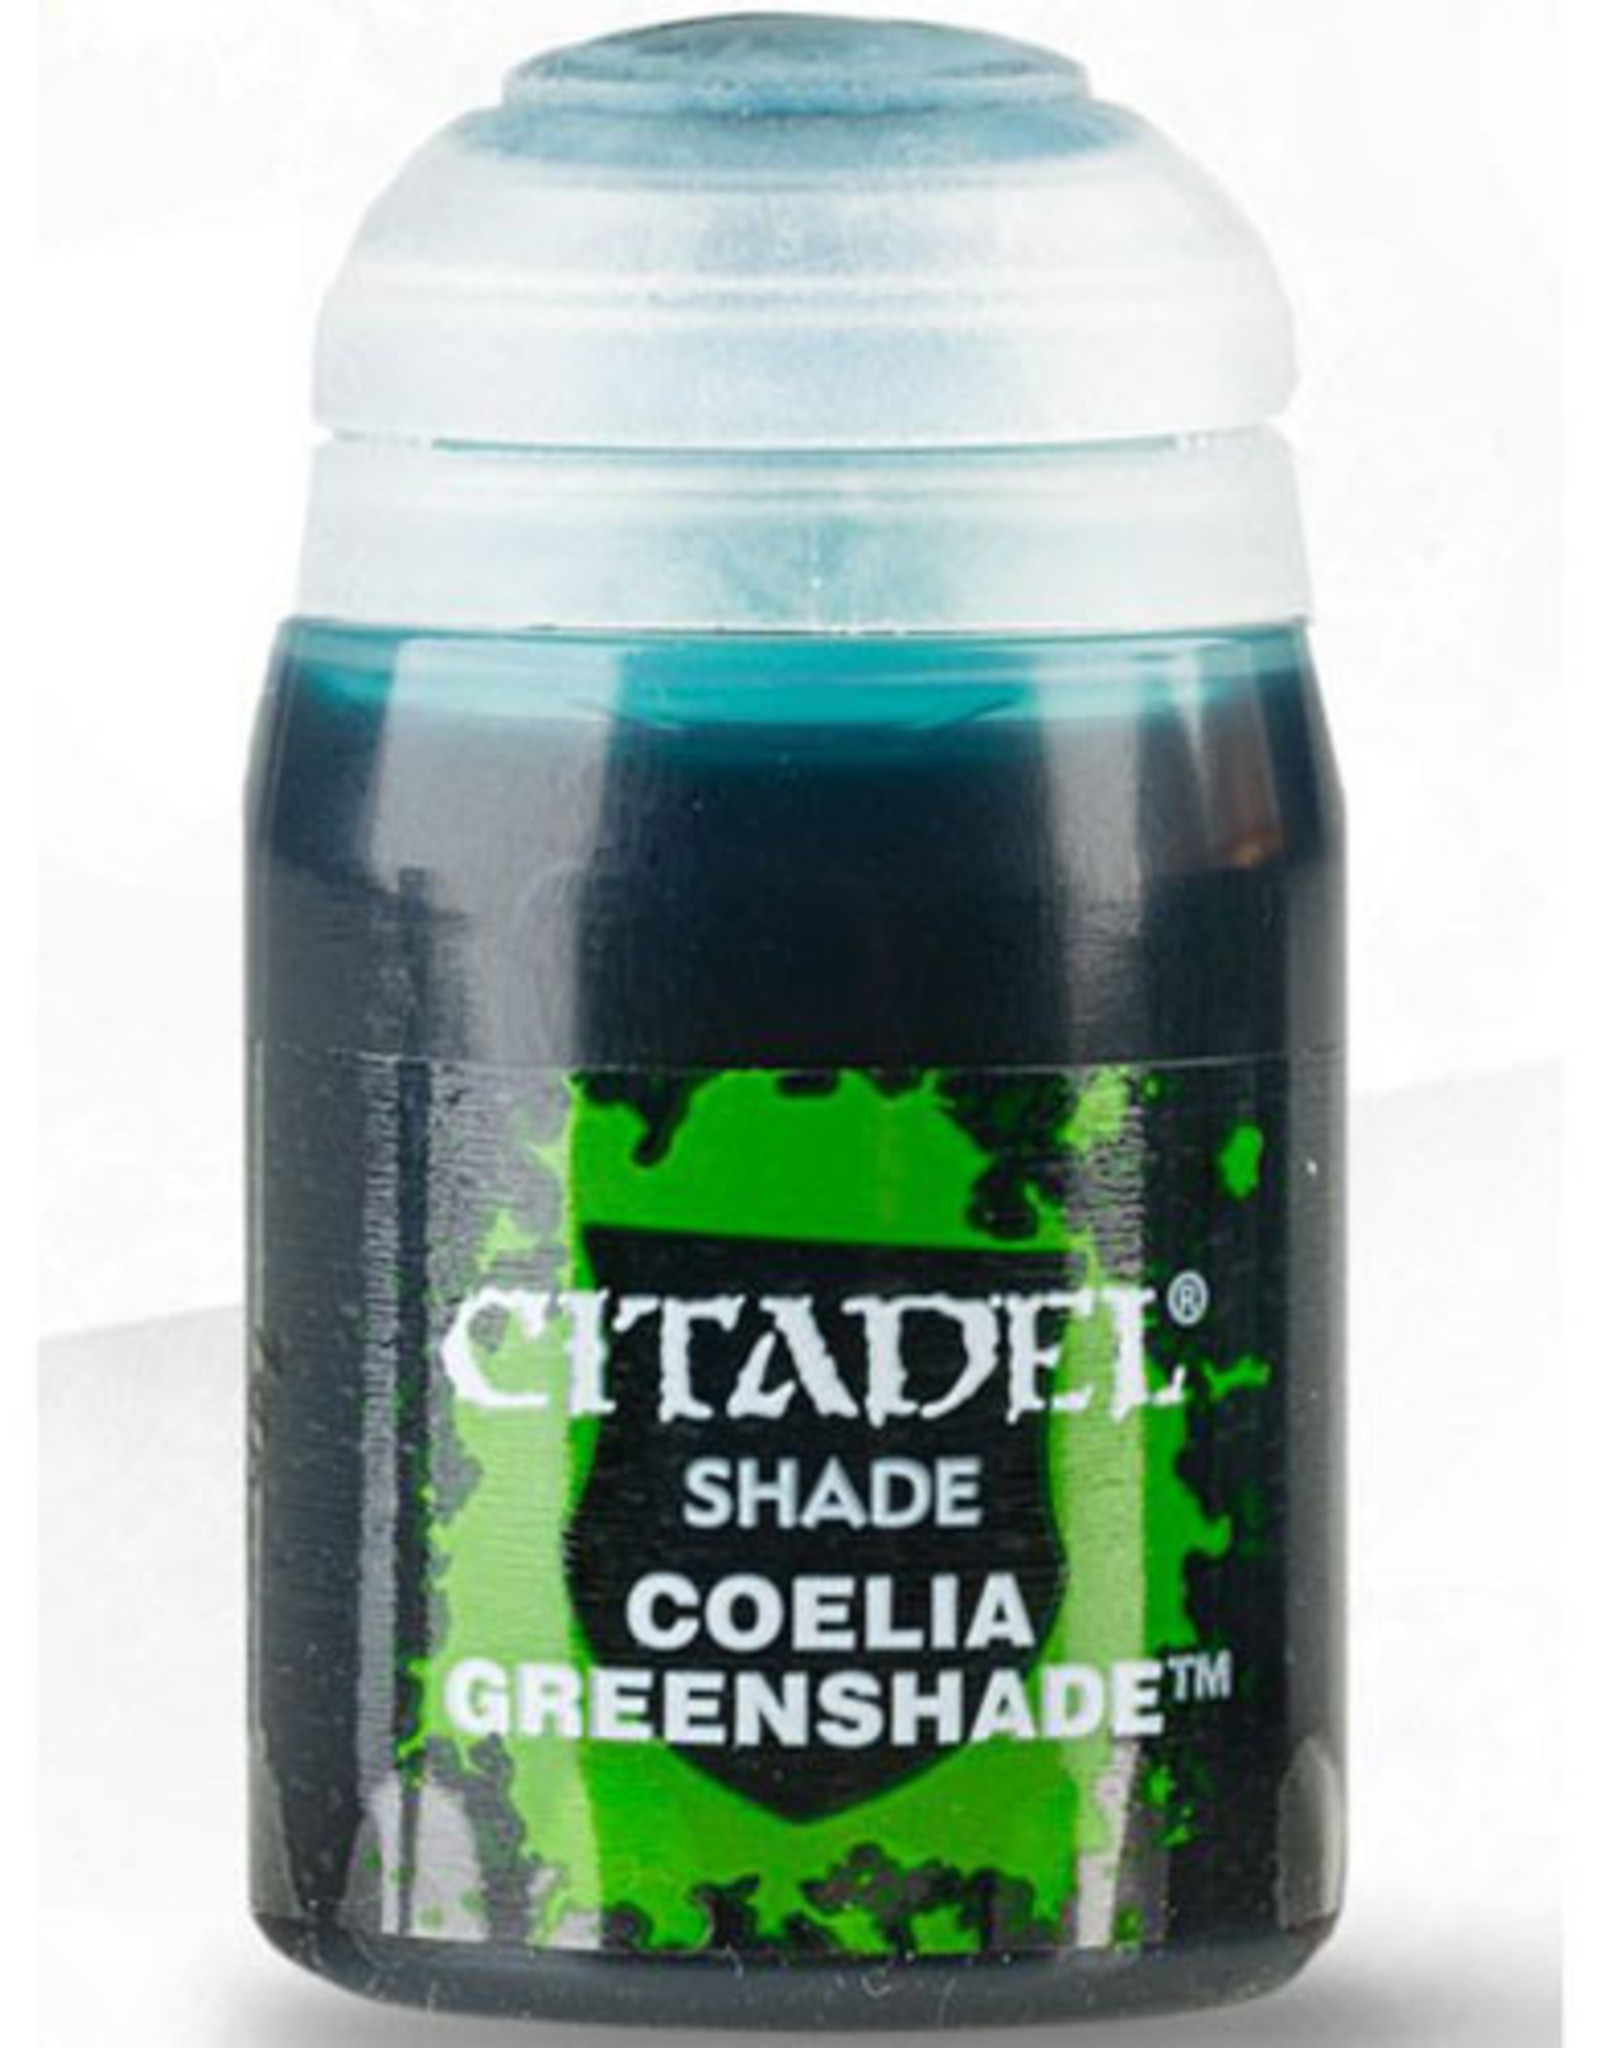 Games Workshop Citadel Shade: Coelia Greenshade